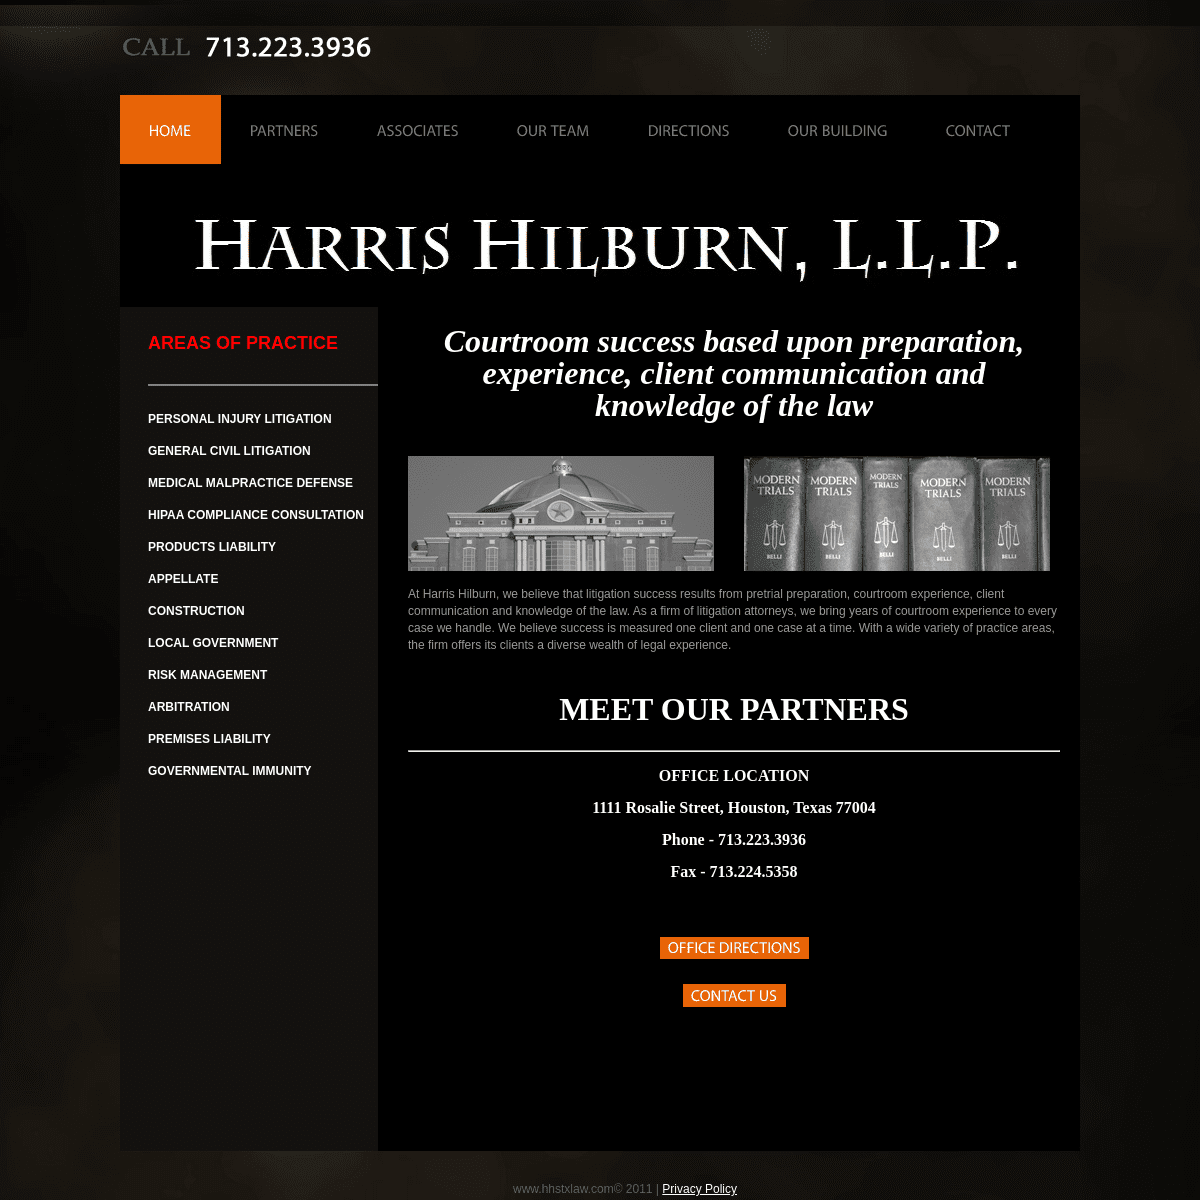 Harris Hilburn, LLP